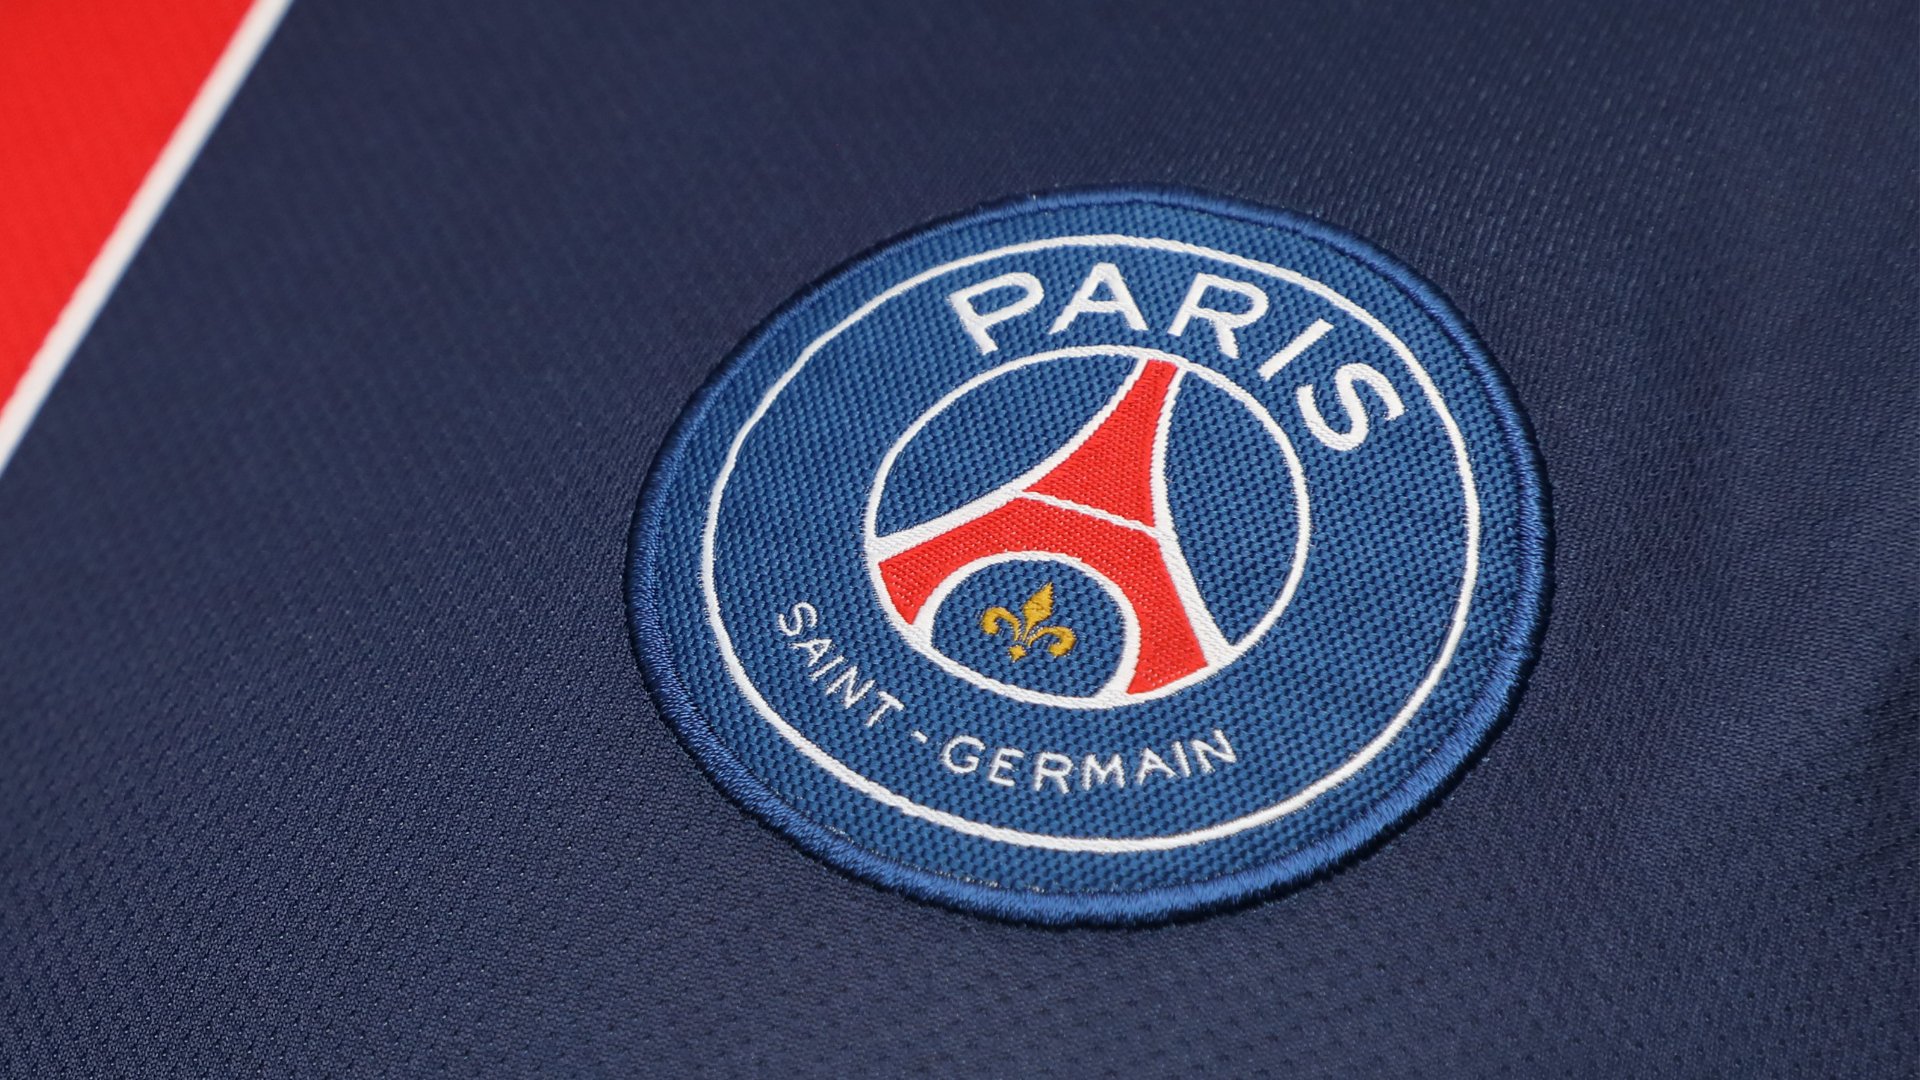 O emblema do time parisiense Paris Saint-Germain.